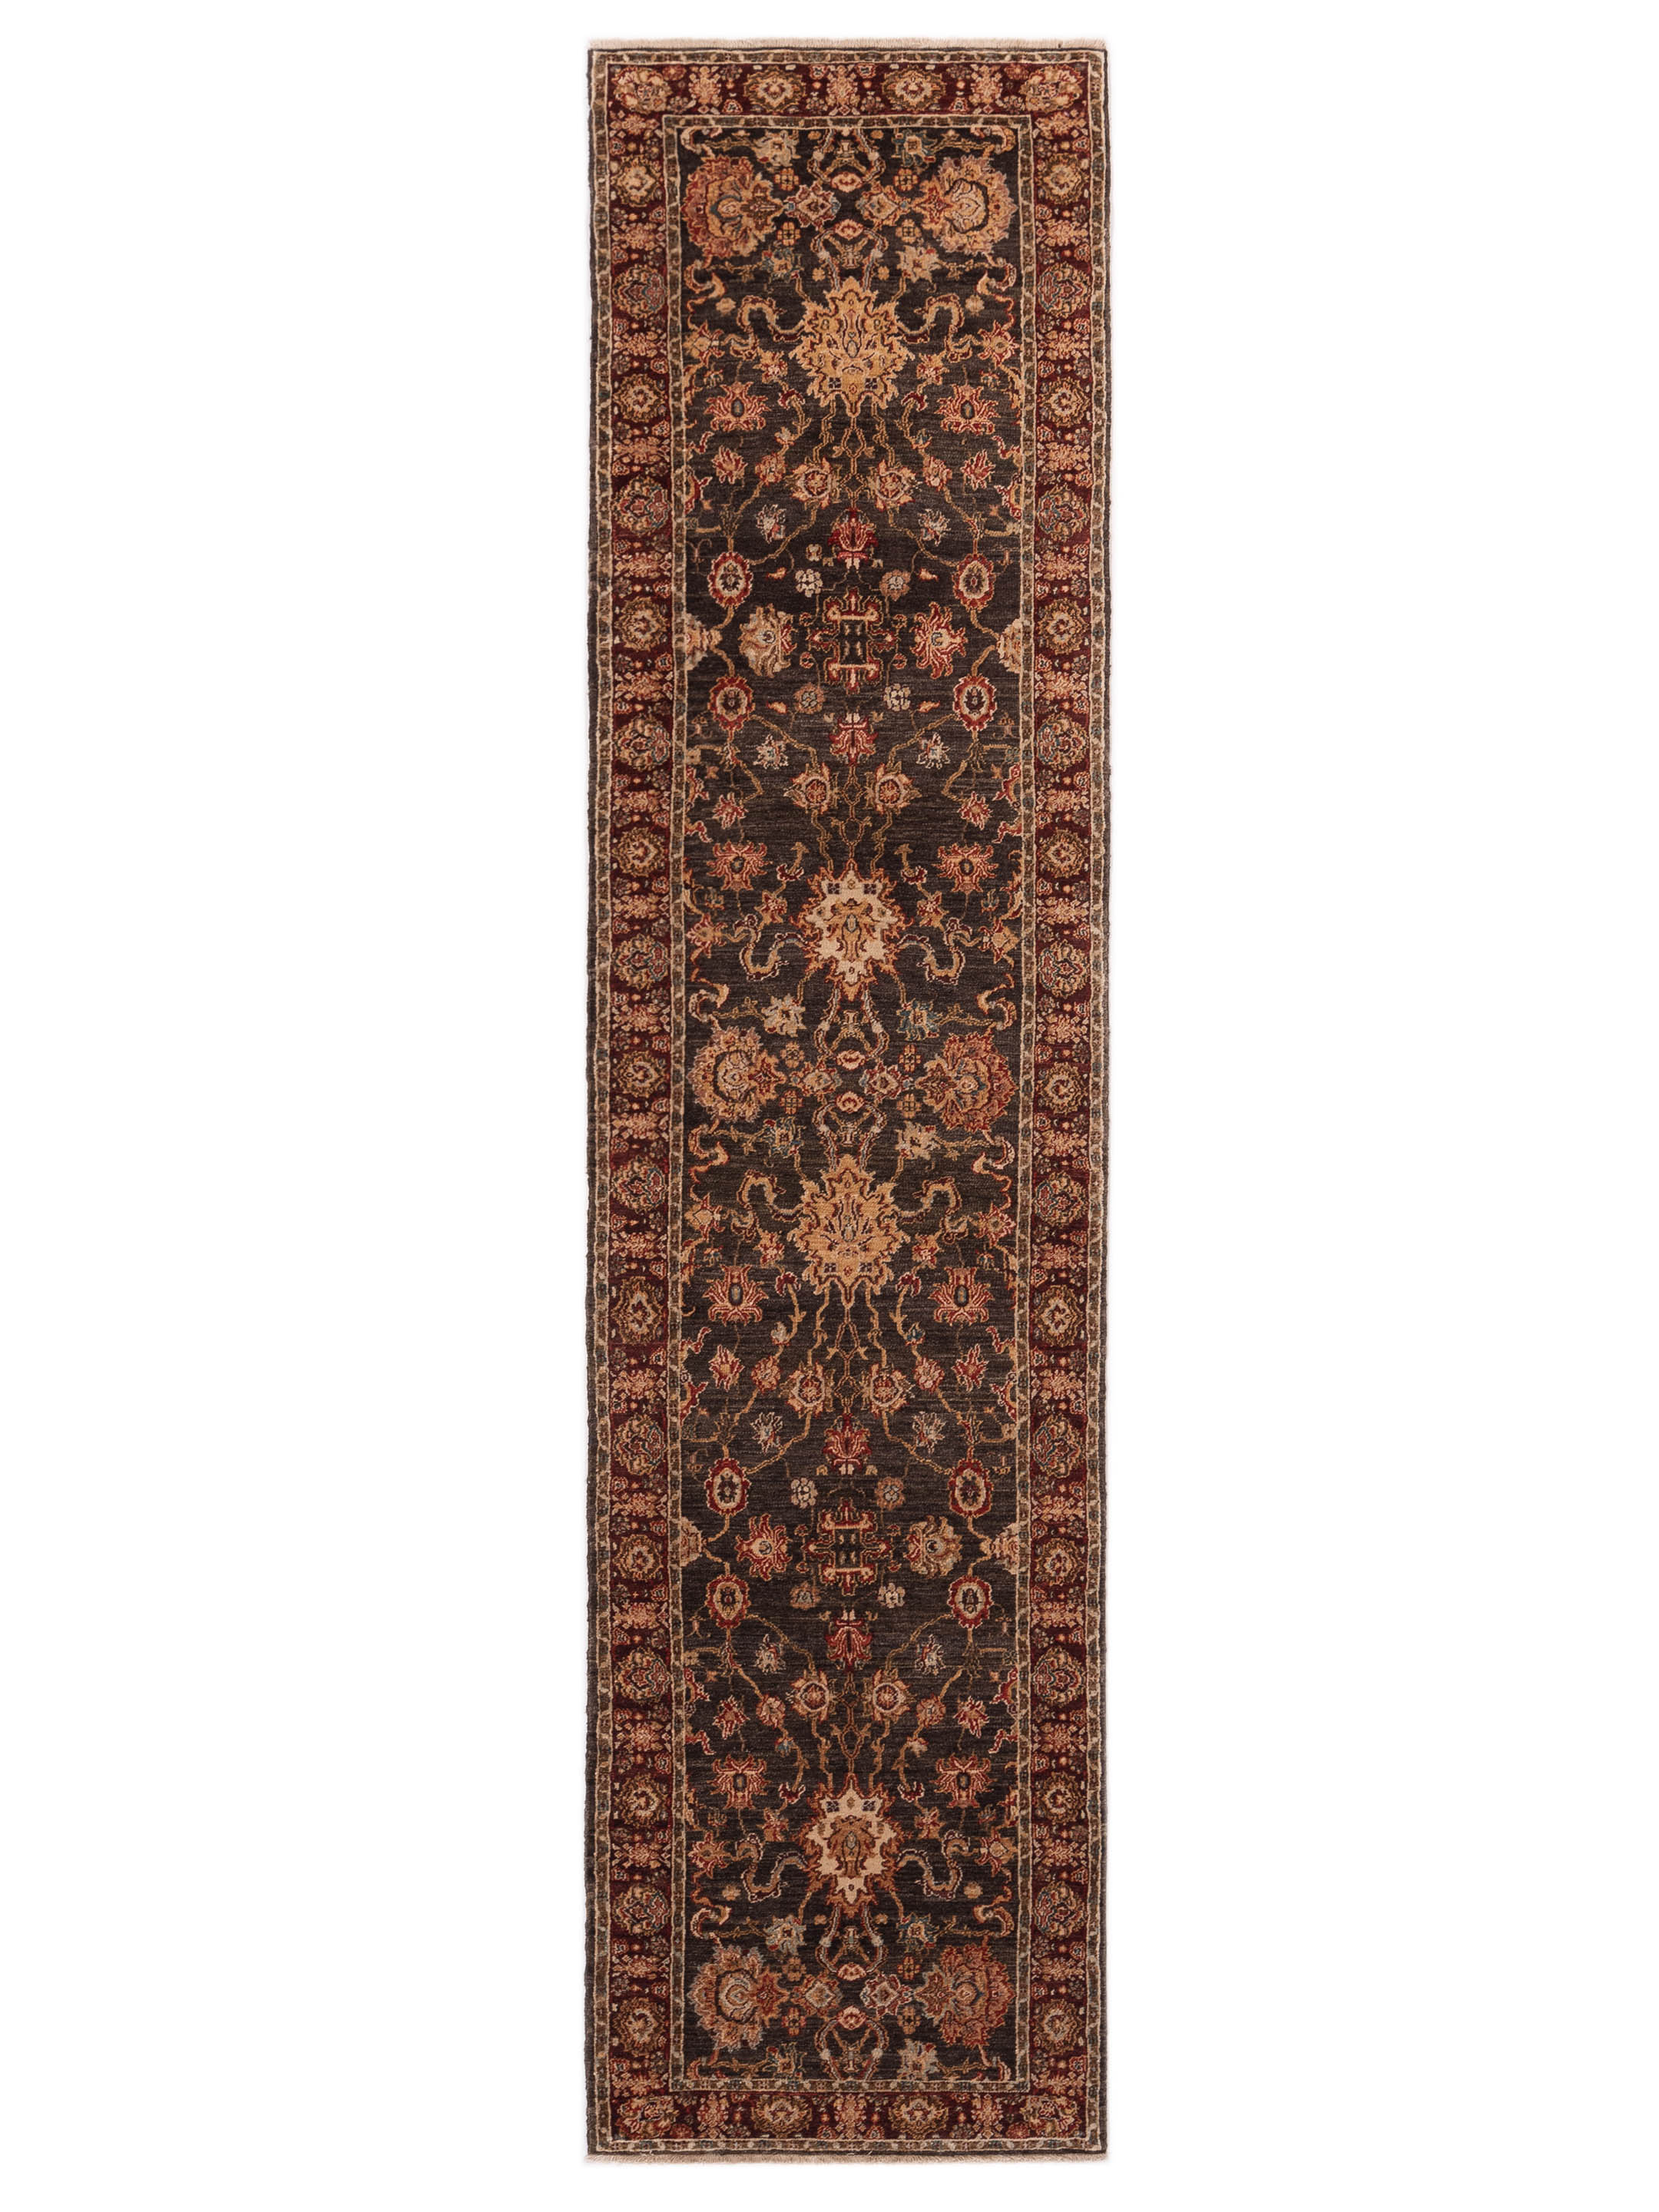 Traditional Charcoal Burgundy Wool runner rug	